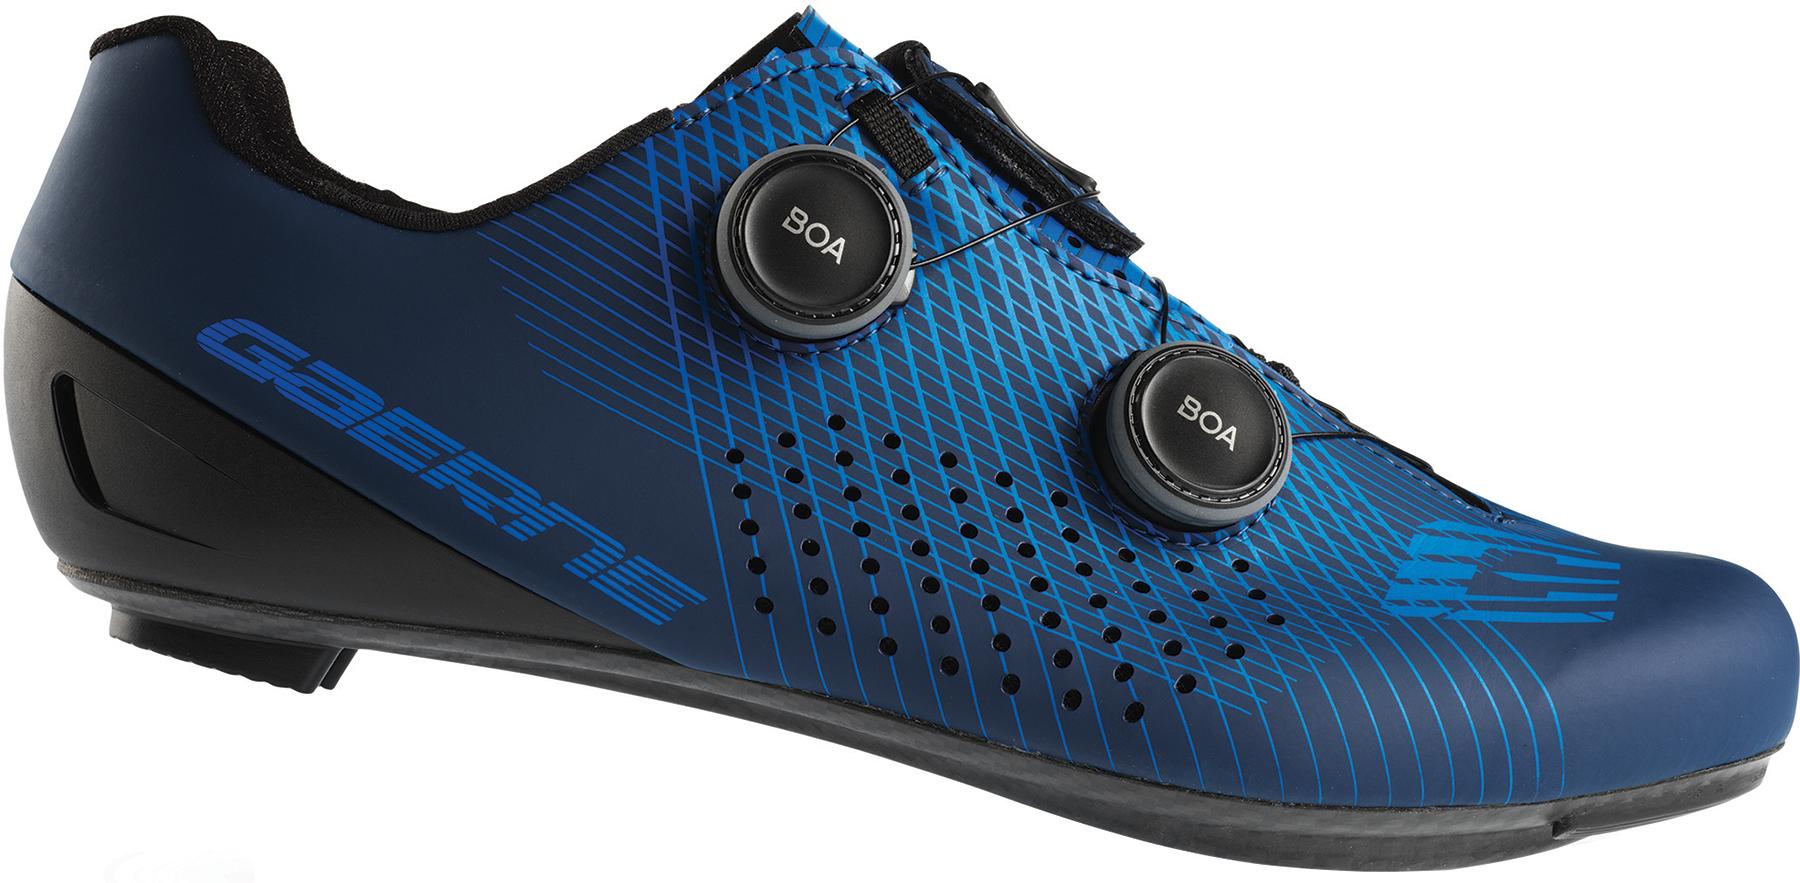 Gaerne Carbon G.fuga Shoes - Blue